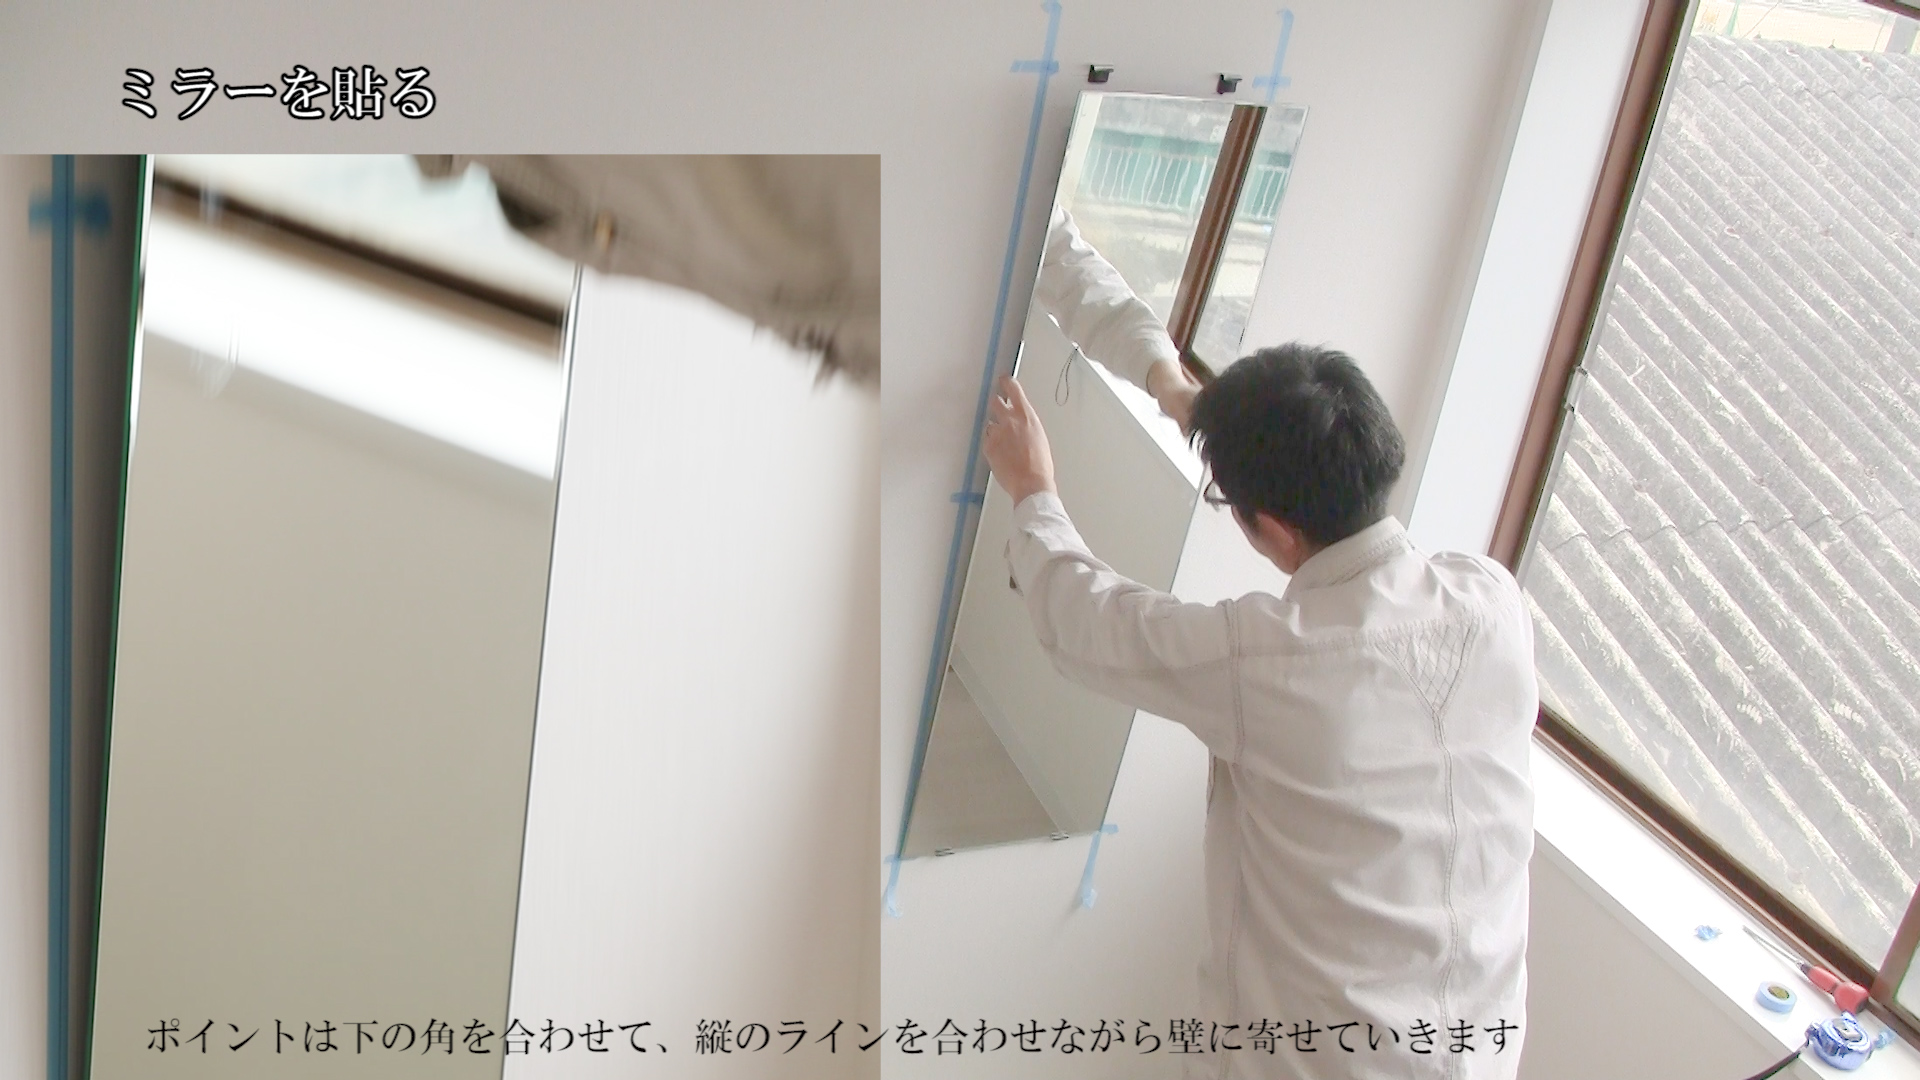 Diyシリーズ ハンガー金具を使って壁にミラーを取り付ける方法 Kg Press ガラス情報発信メディア